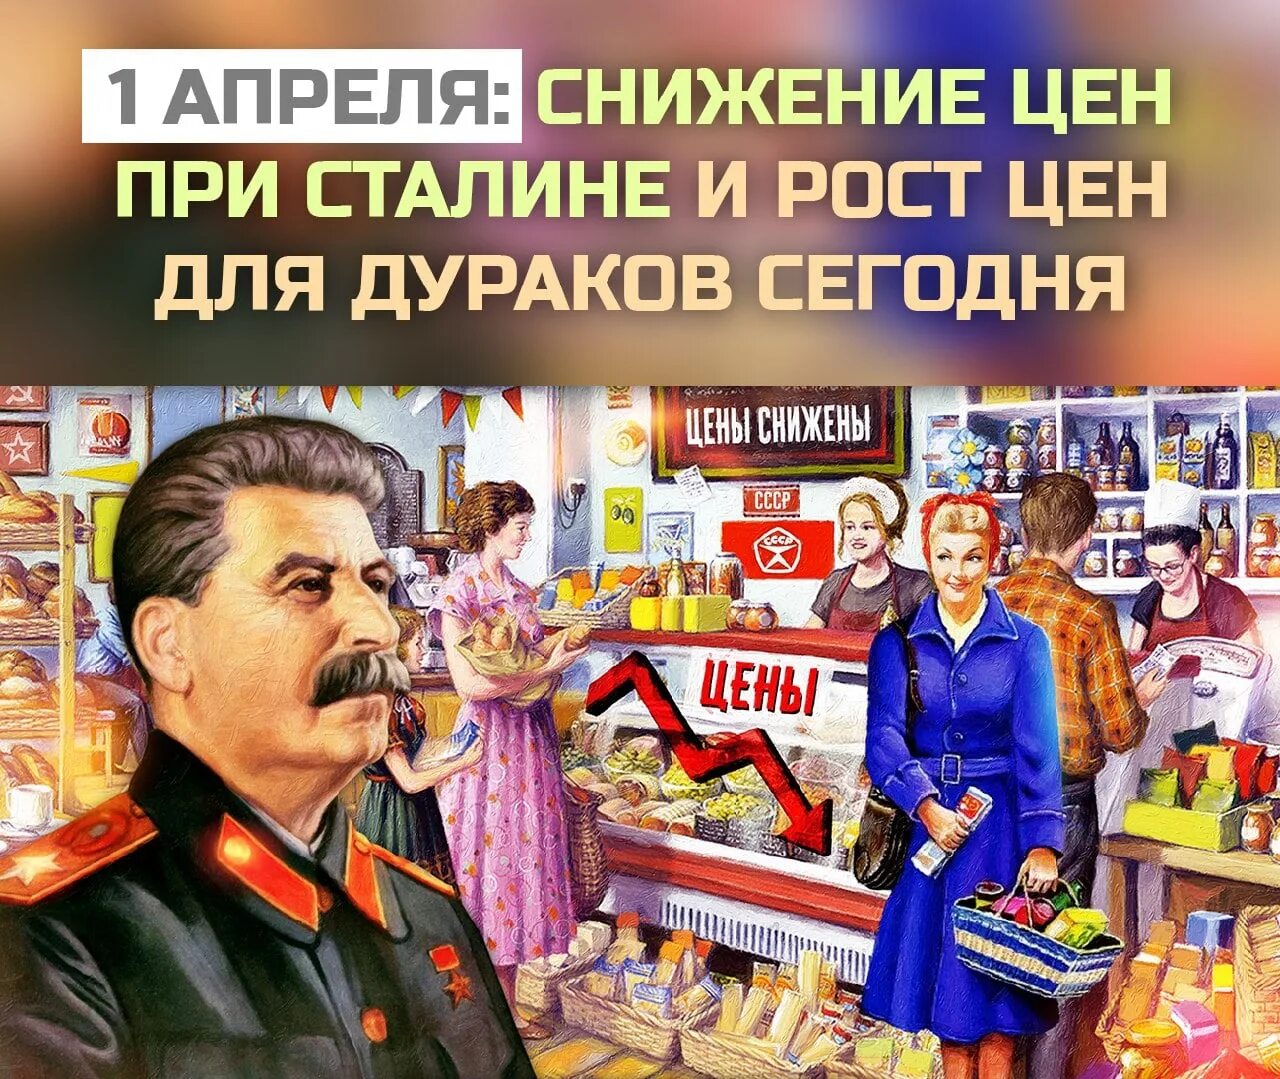 1 апреля снижение цен. 1 Апреля снижение цен при Сталине. 1 Апреля Сталин снижал цены. Первое апреля снижение цен картинках при Сталине. 1 Апреля снижение цен в СССР.